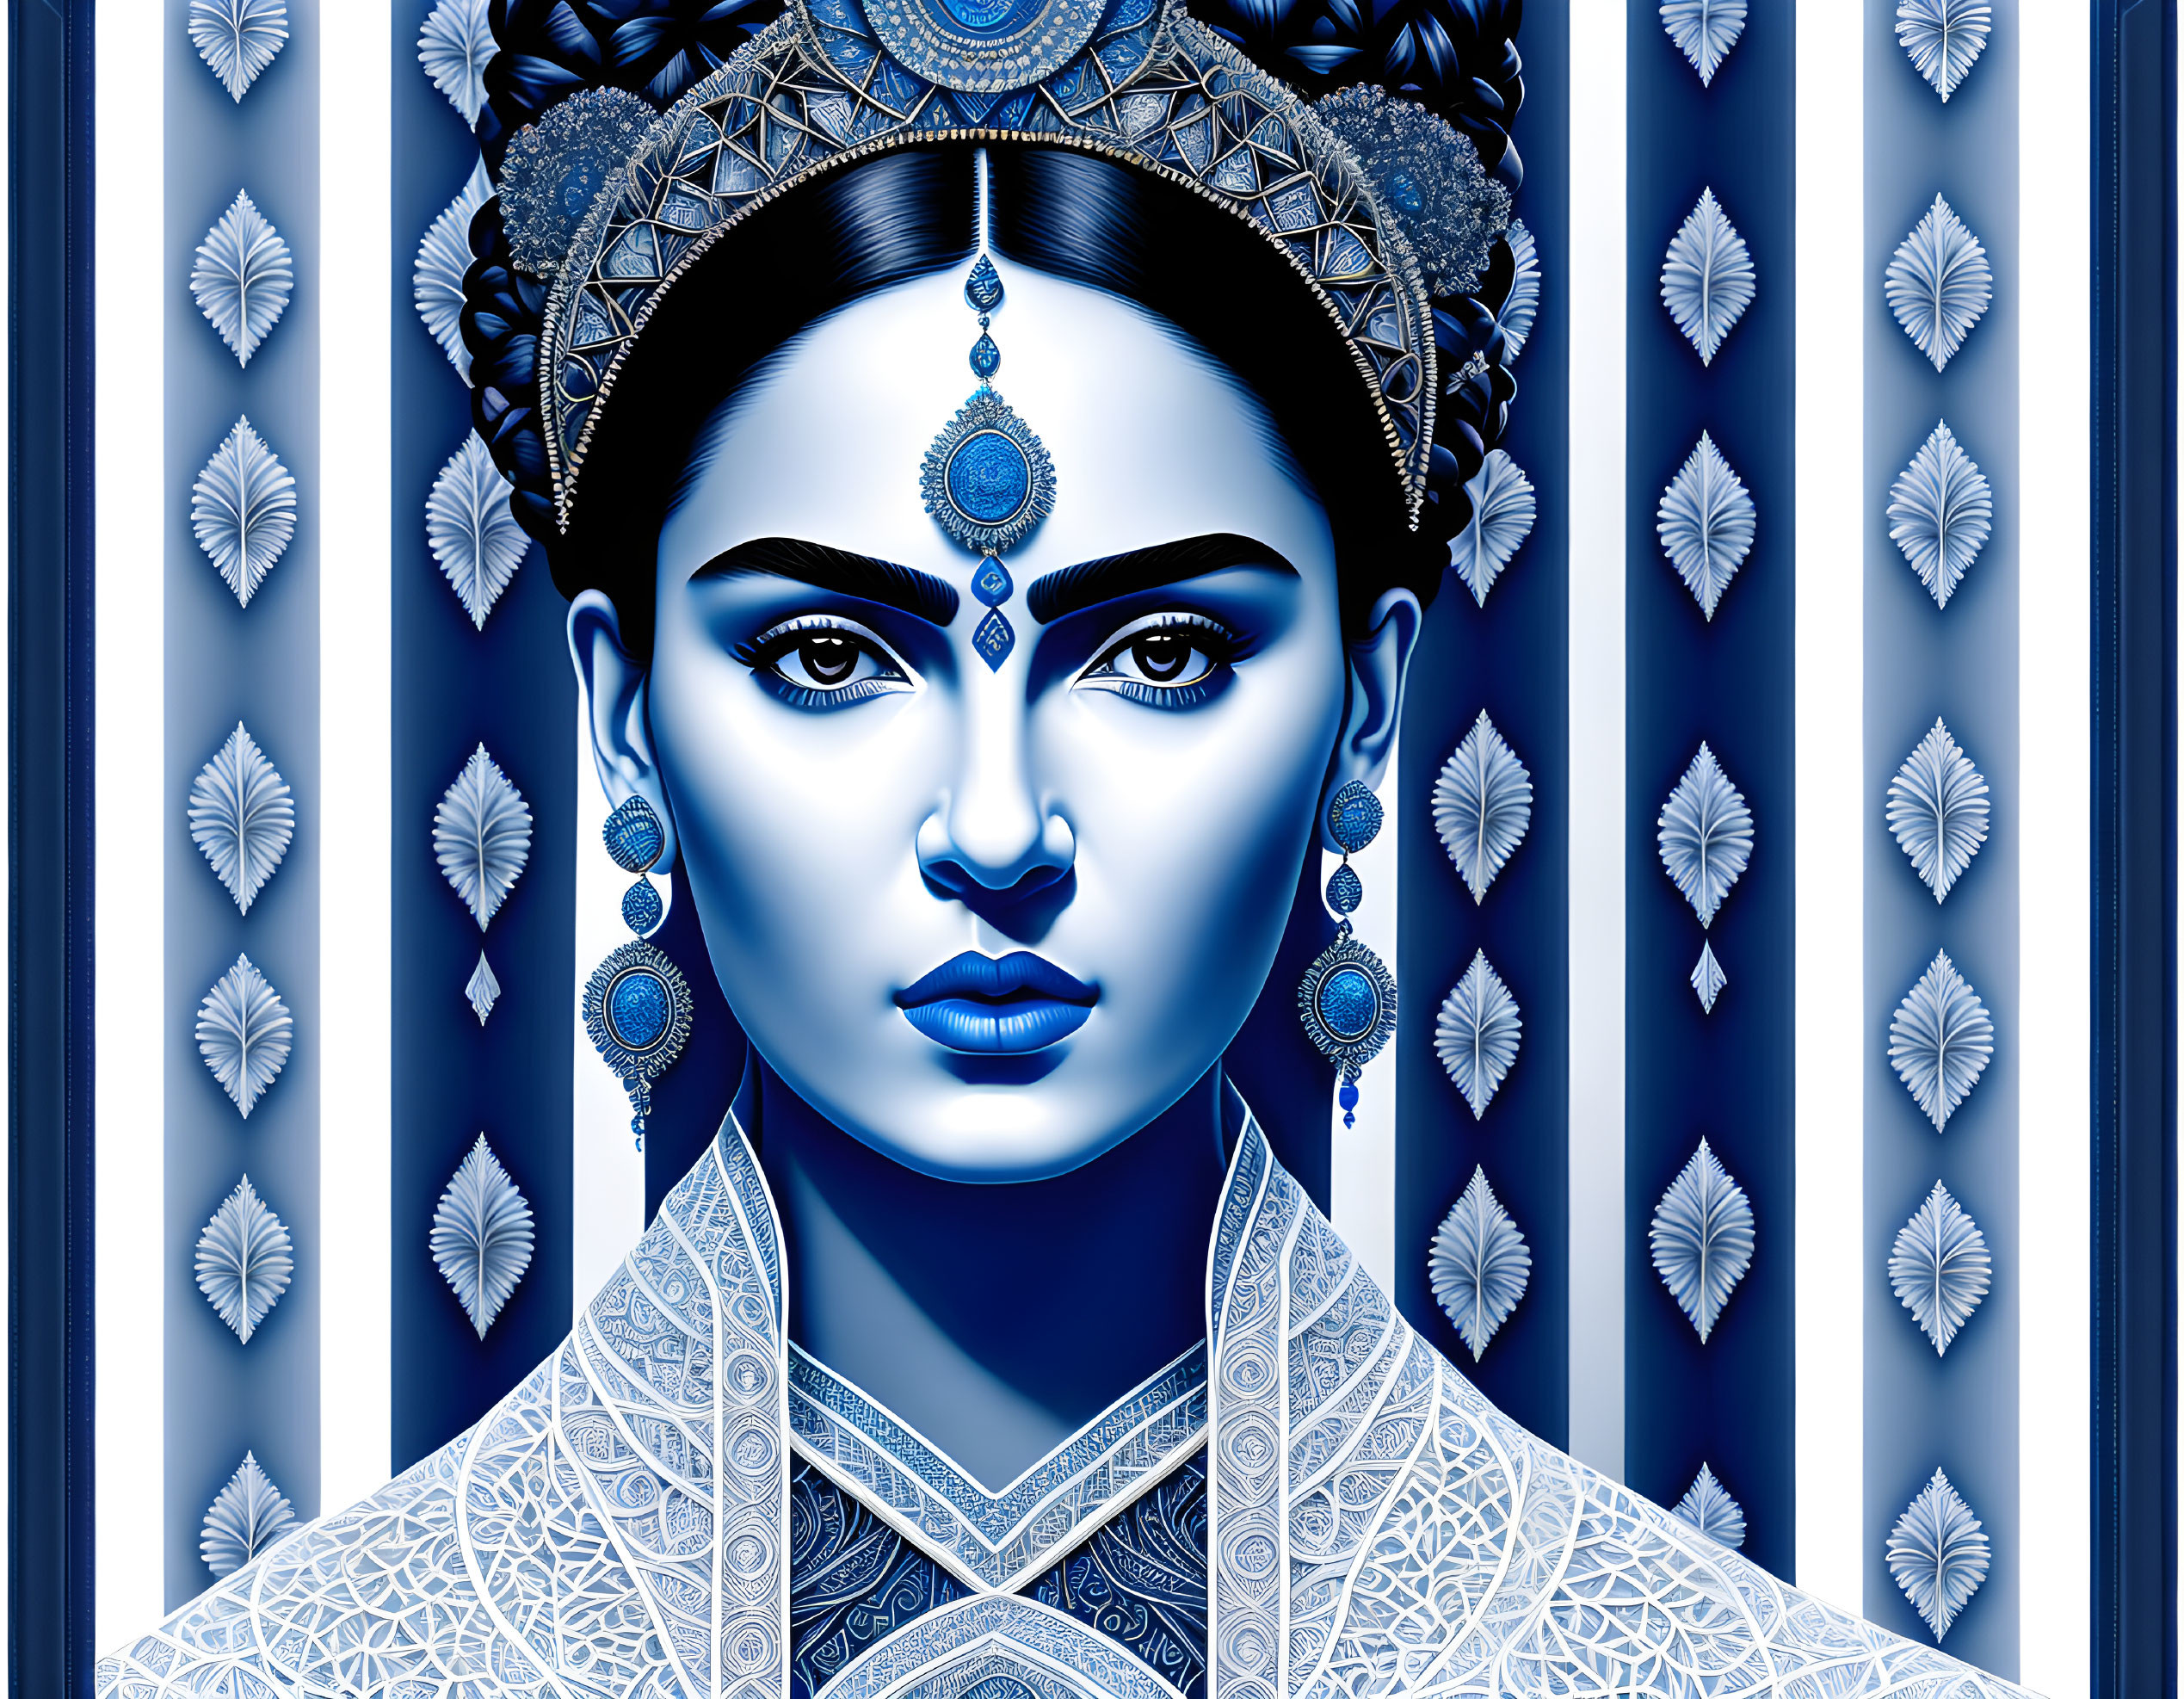 Intricate blue monochromatic digital art portrait of woman with decorative headwear and jewelry